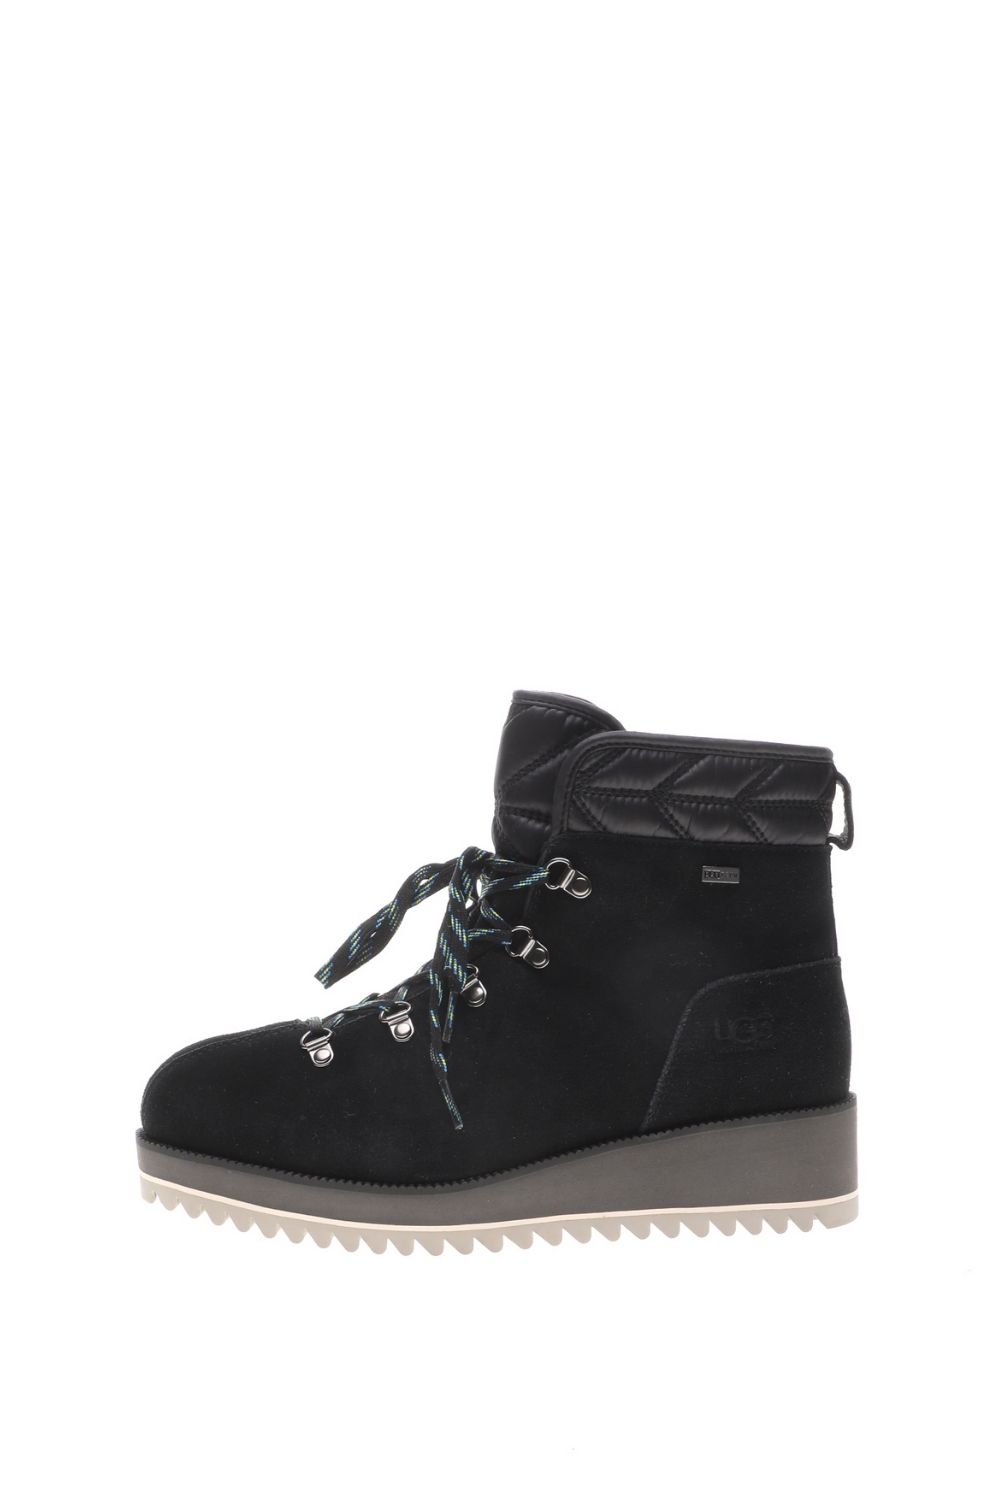 UGG - Γυναικεία μποτάκια UGG Birch Lace-Up Boot μαύρα Γυναικεία/Παπούτσια/Μπότες-Μποτάκια/Μποτάκια